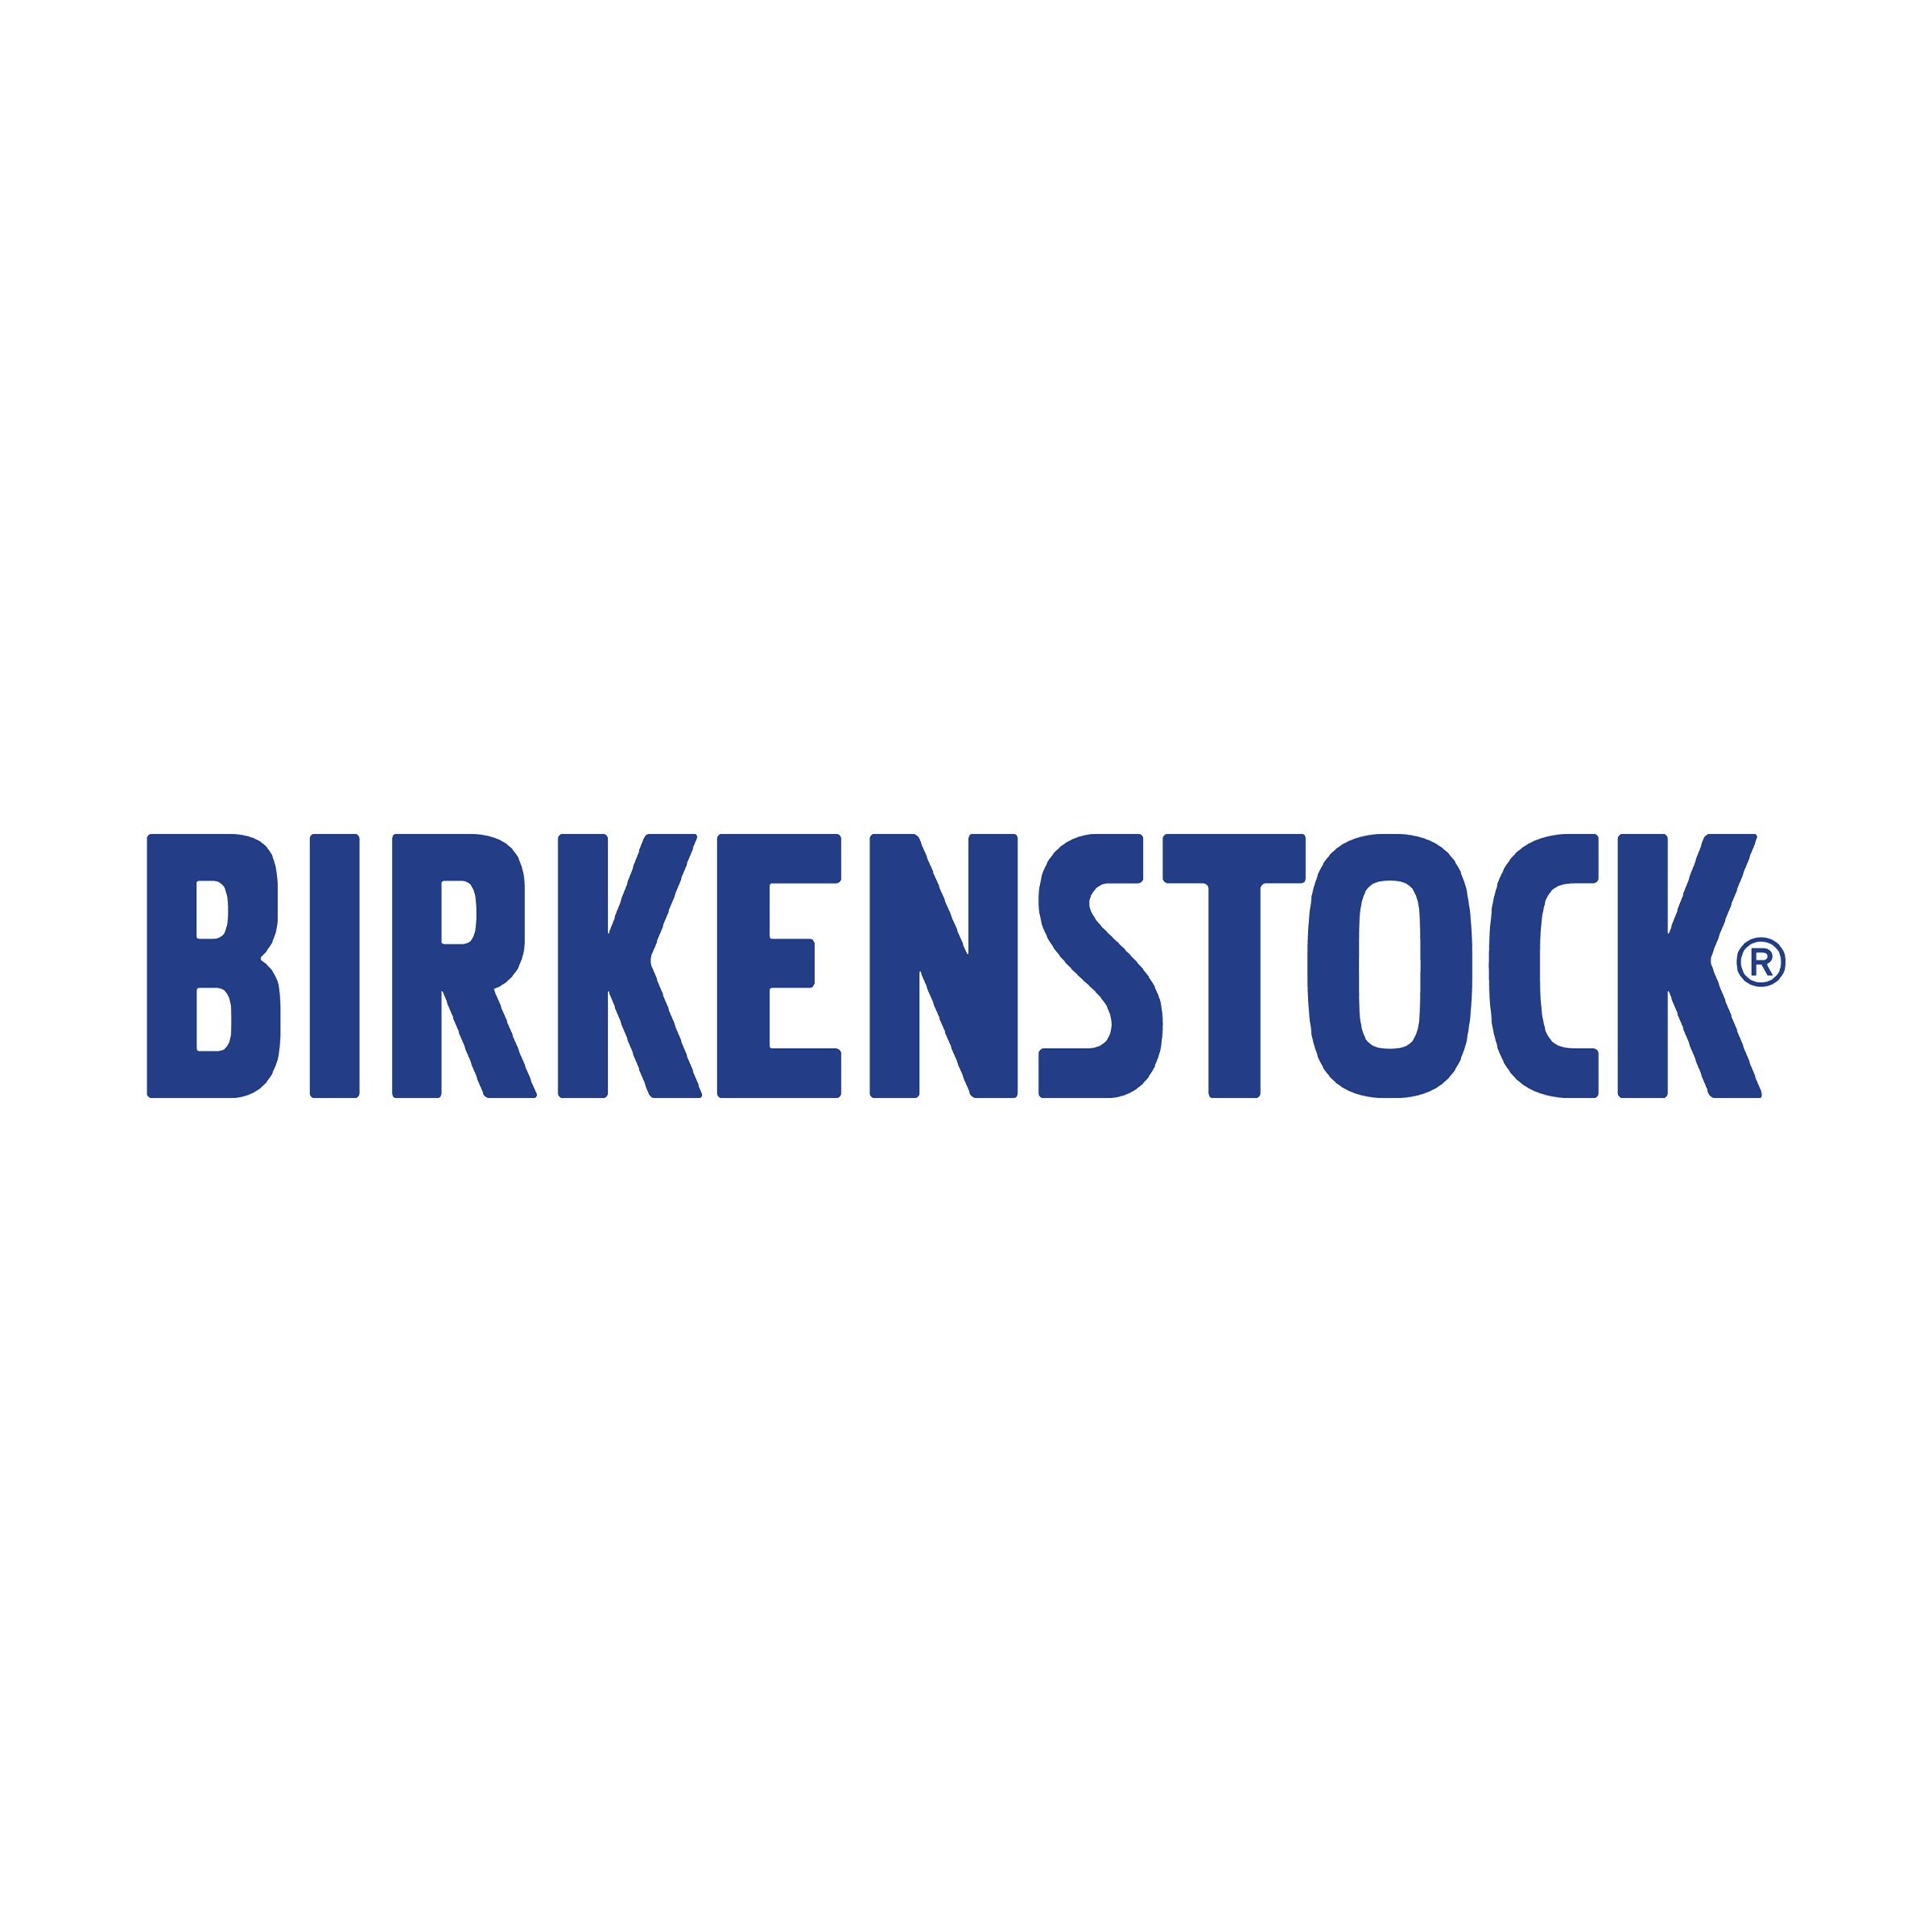 birkenstock-logo-2.jpg